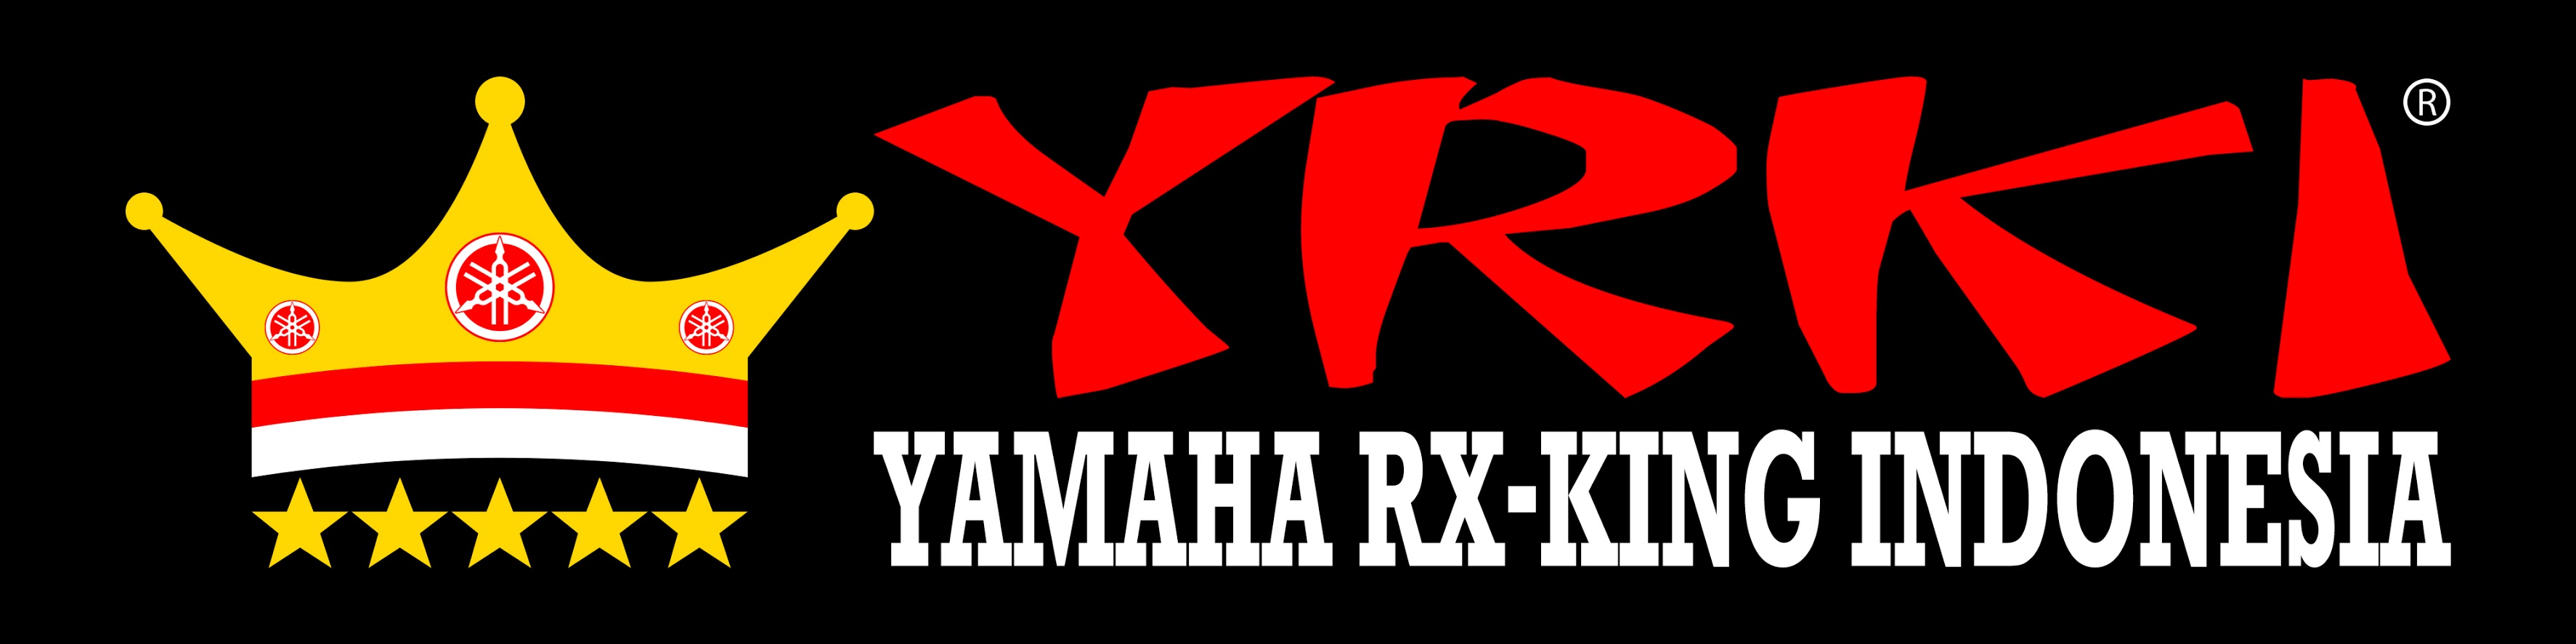 Yamaha RX-King Indonesia (YRKI) Blog: Februari 2016